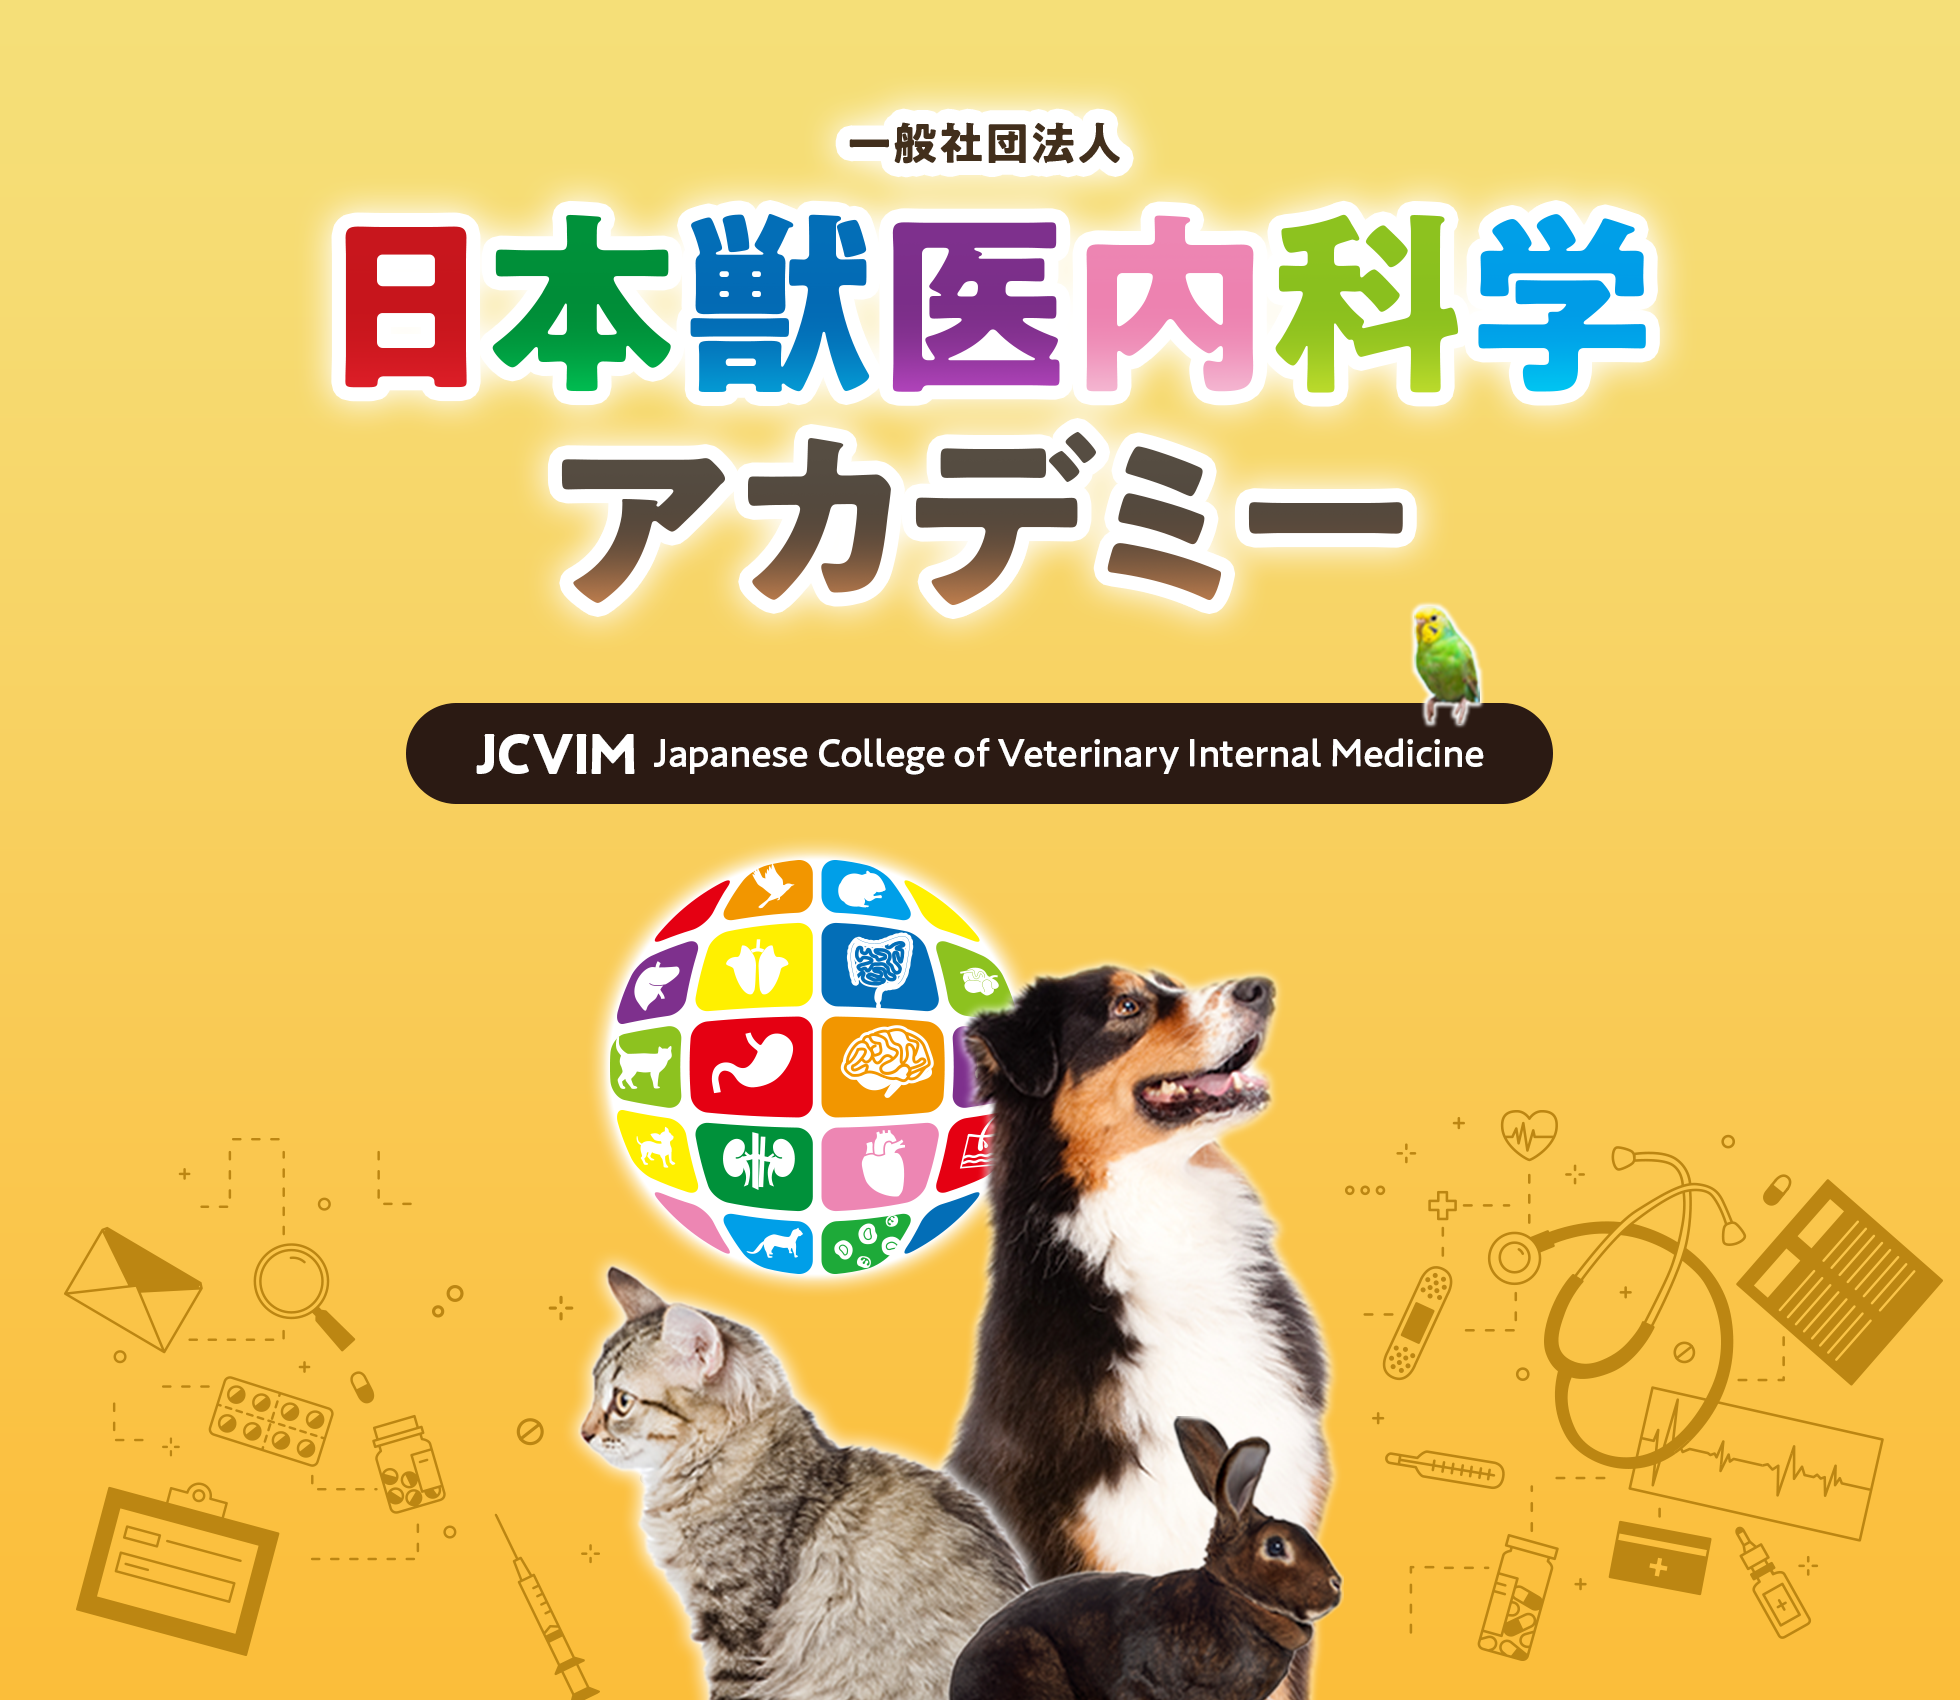 一般社団法人 日本獣医内科学アカデミー（JCVIM Japanese College of Veterinary Internal Medicine）